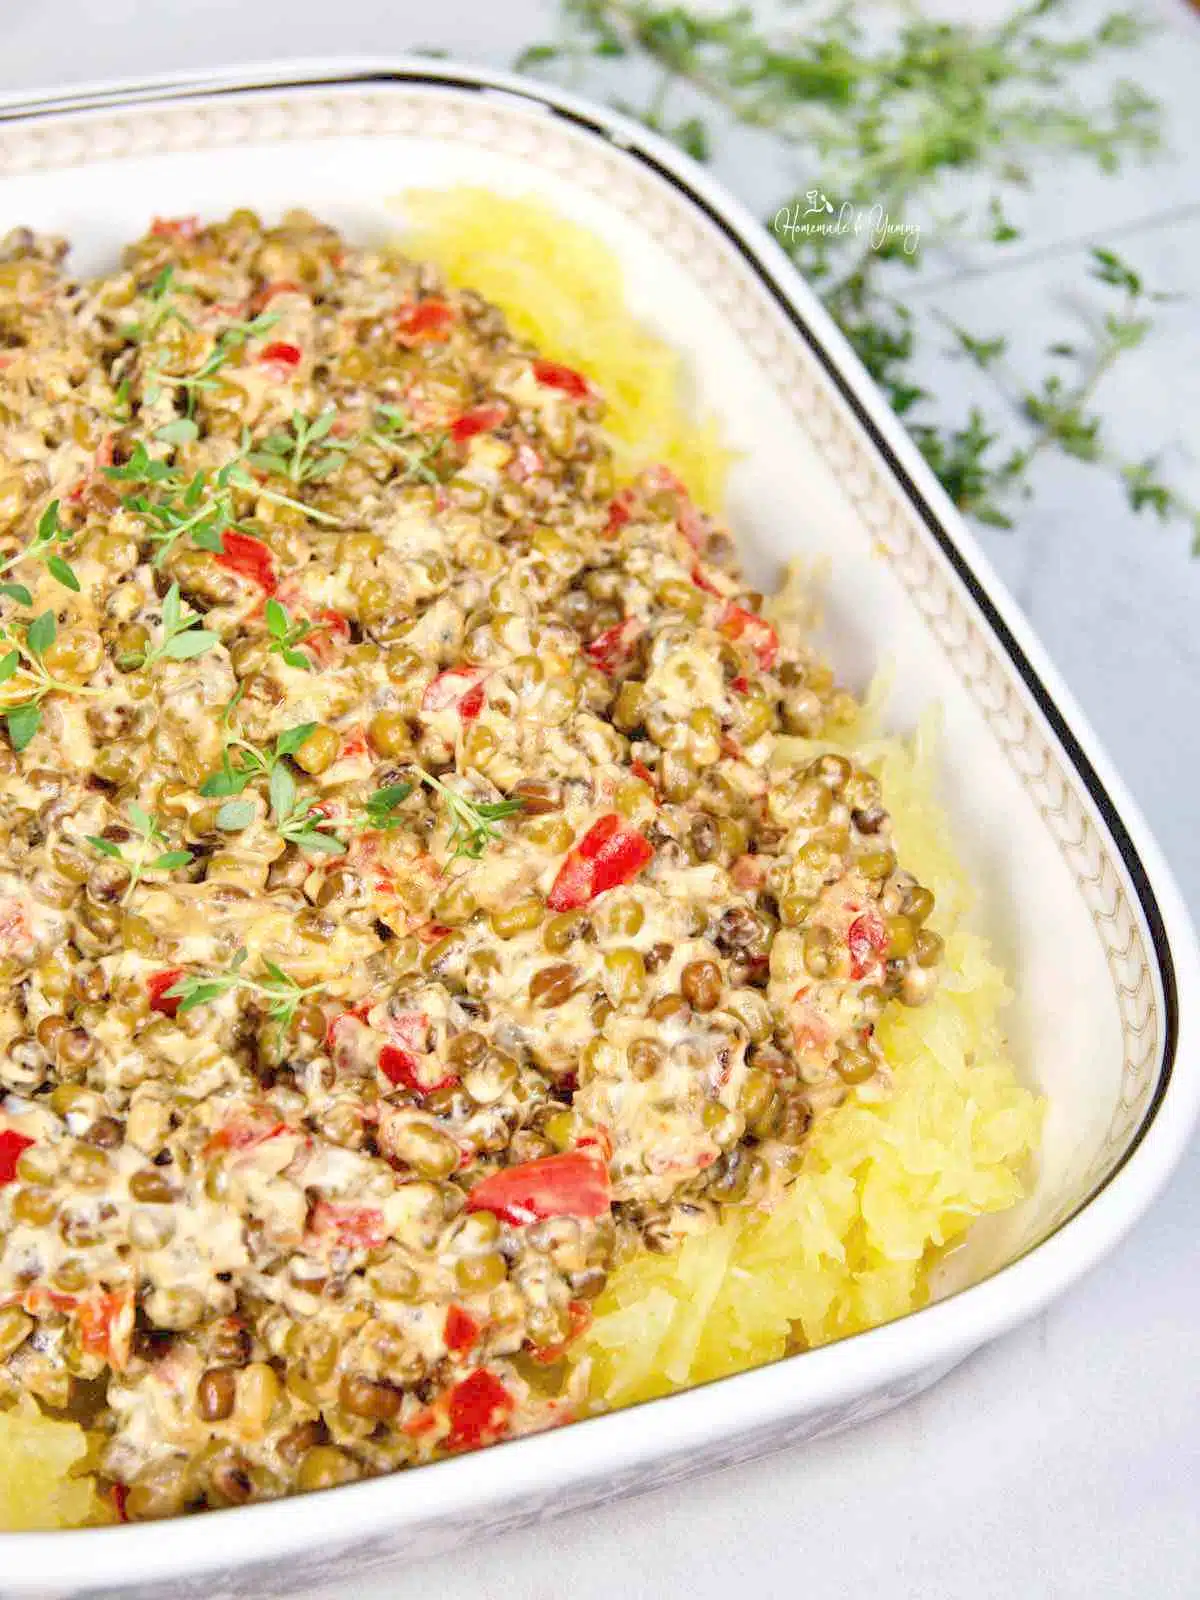 Puy Lentil Recipe for meatless pasta sauce.